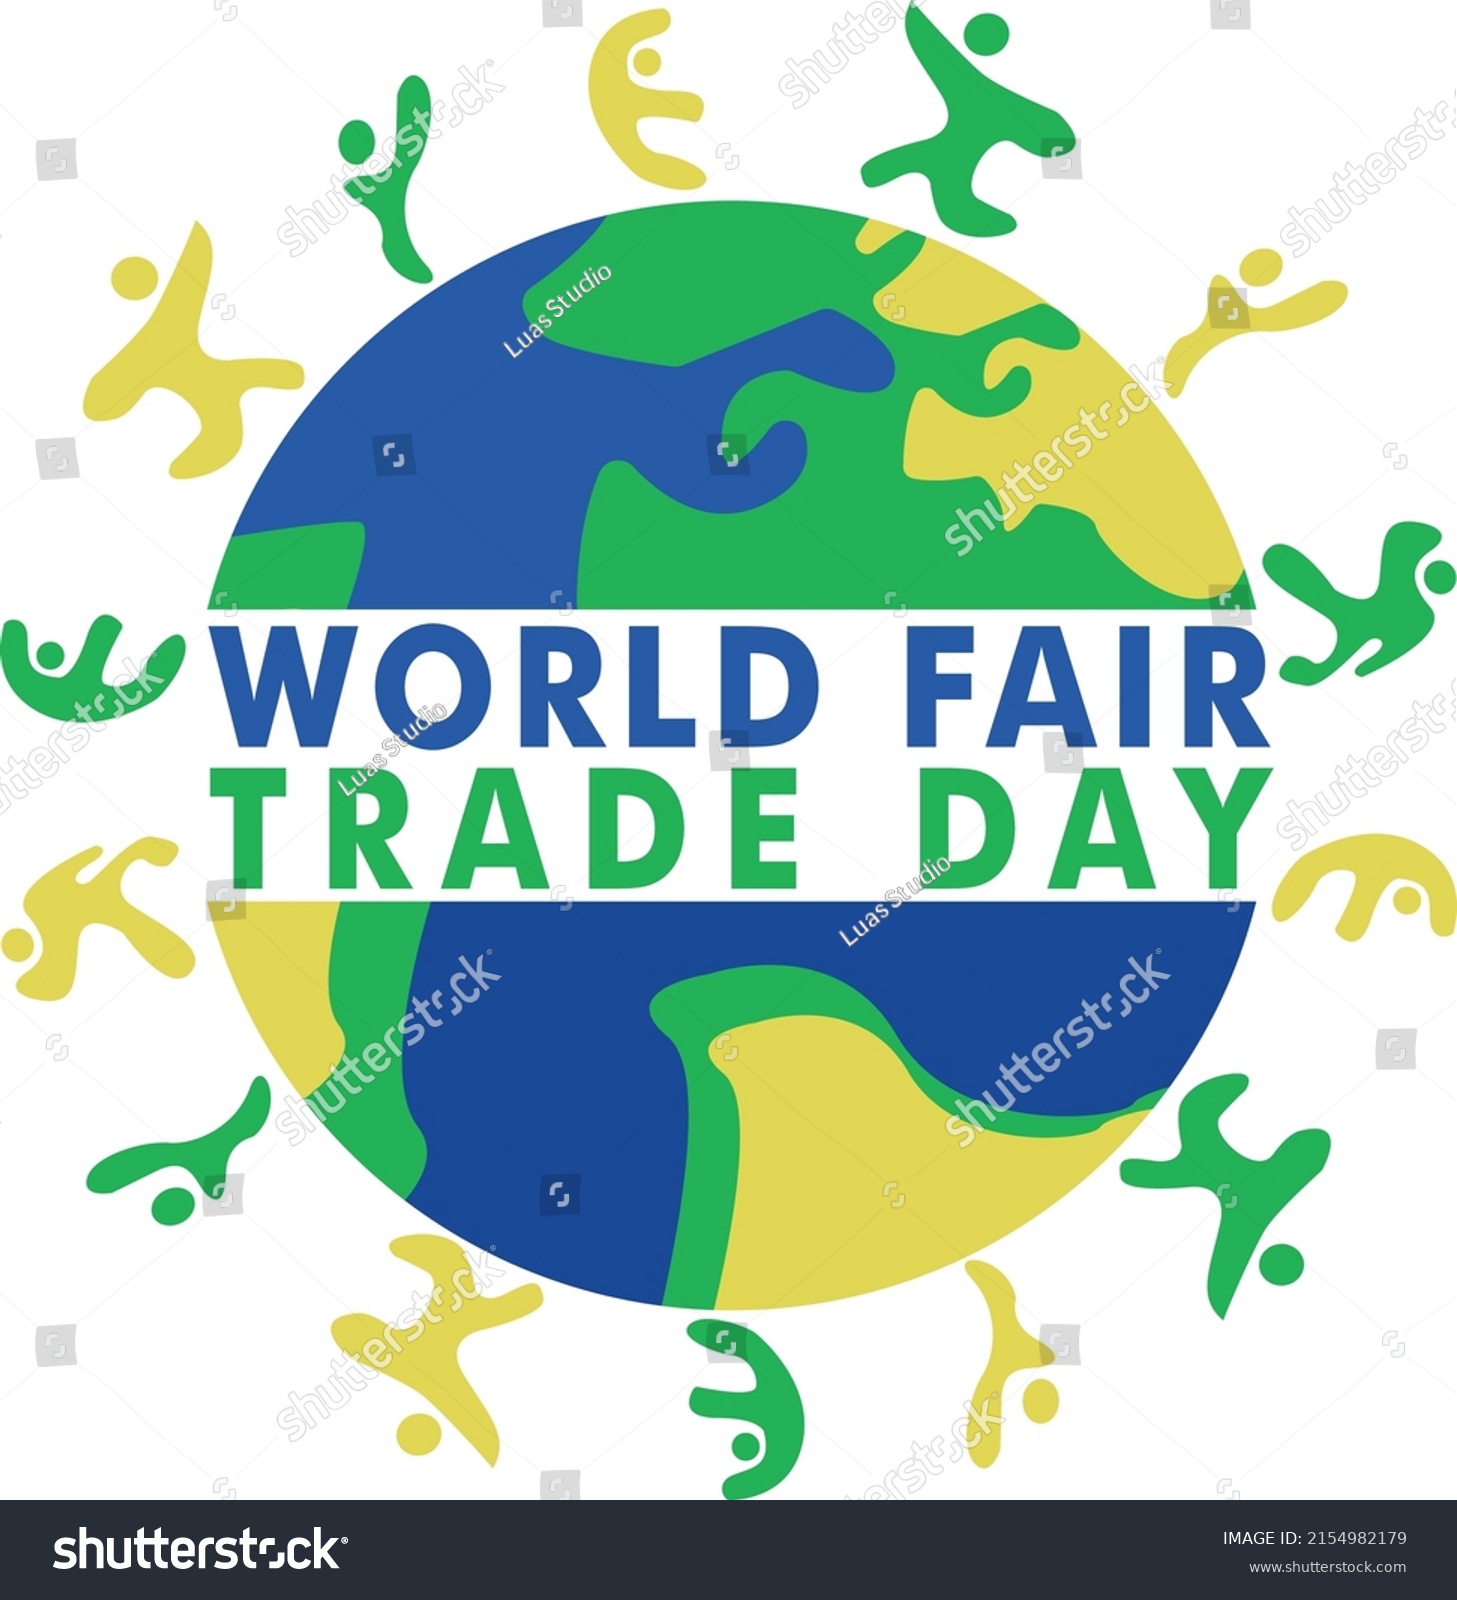 1,130 World fair trade day Images, Stock Photos & Vectors Shutterstock